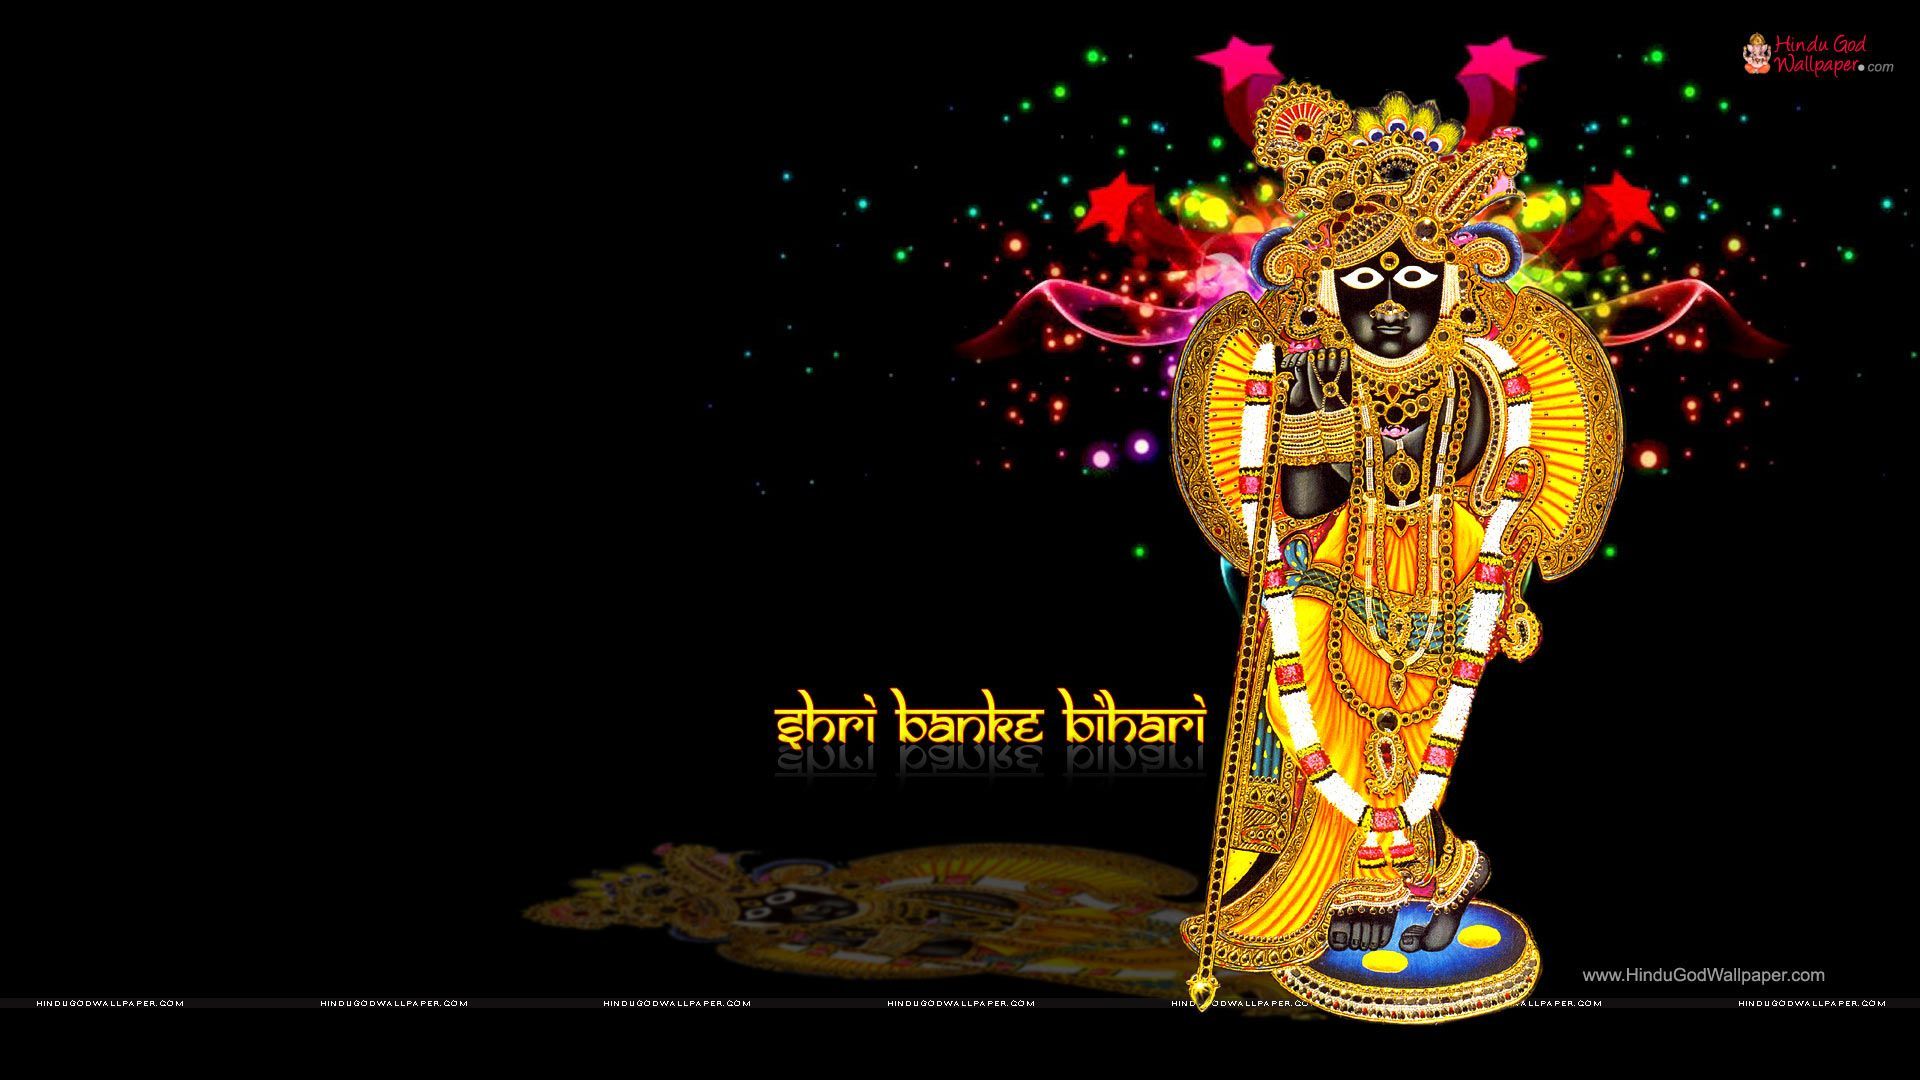 Banke Bihari. Wallpaper website, HD .in.com